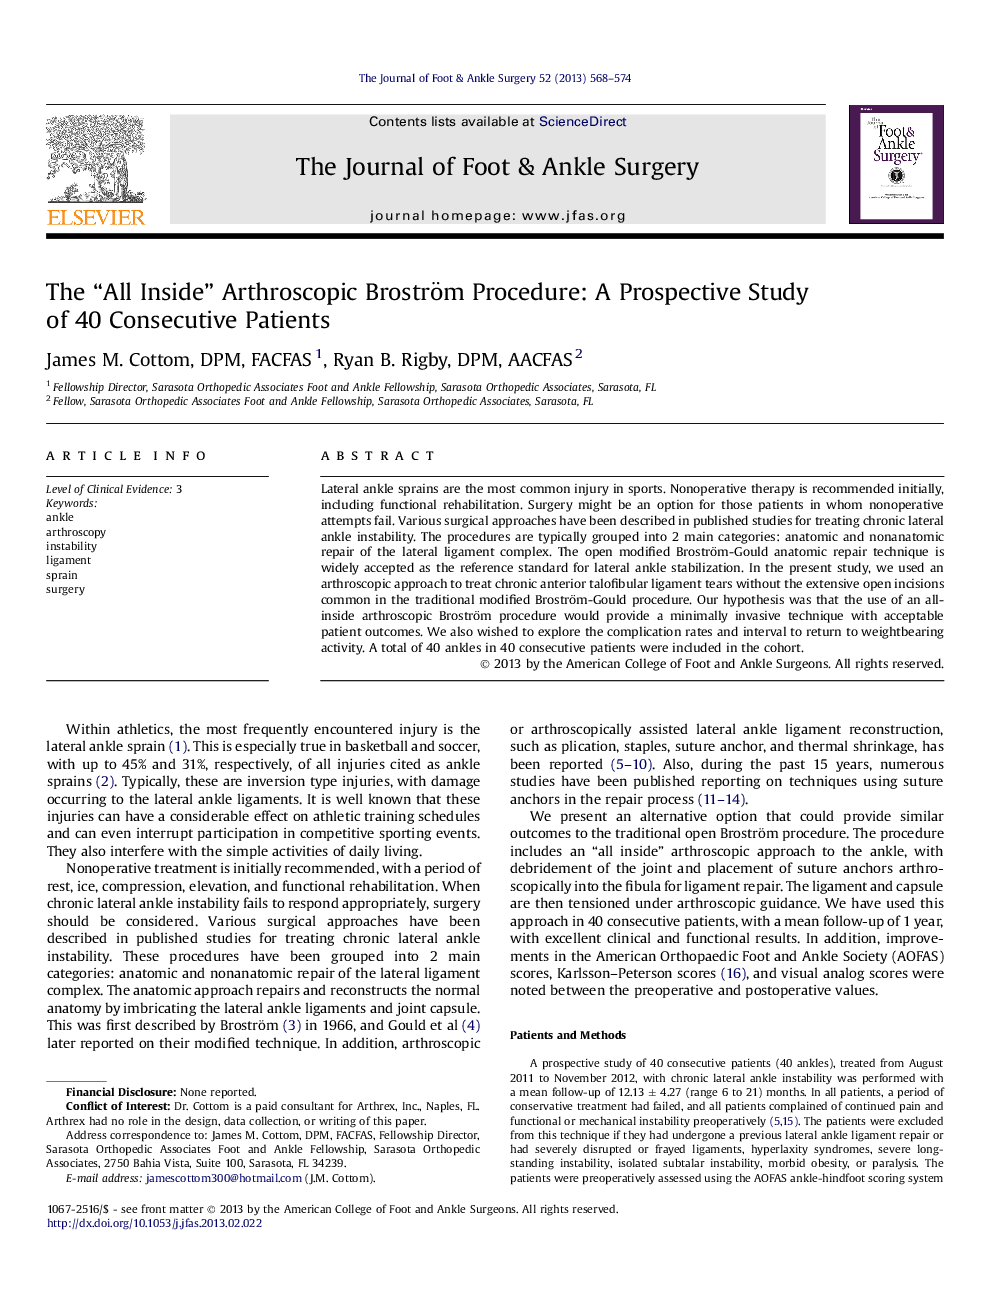 The “All Inside” Arthroscopic Broström Procedure: A Prospective Study of 40 Consecutive Patients 